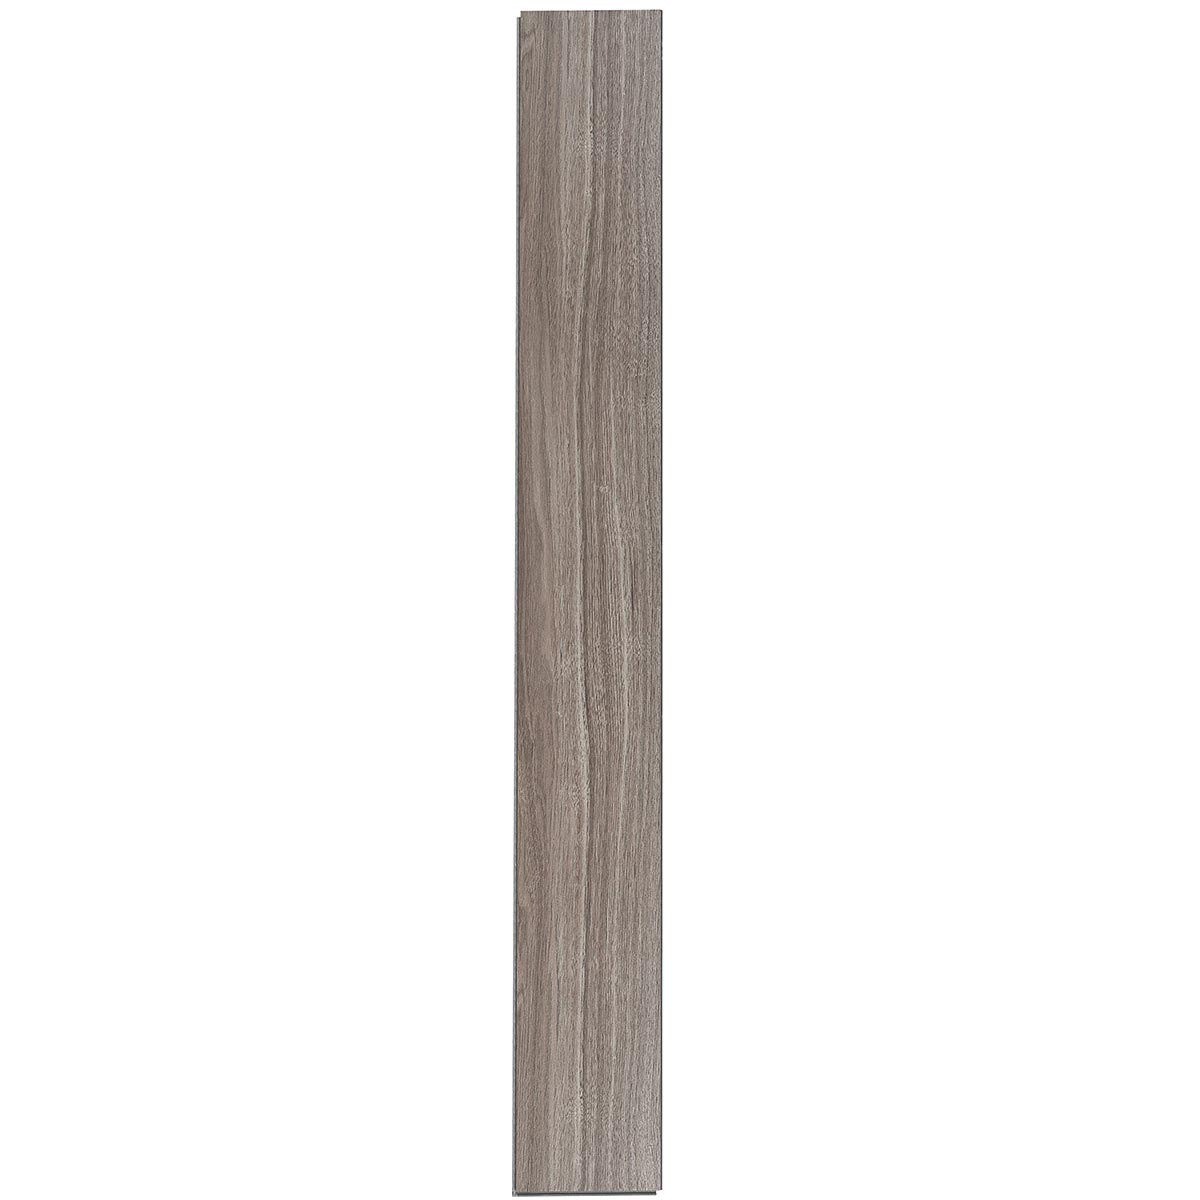 Image of single plank of flooring on white background